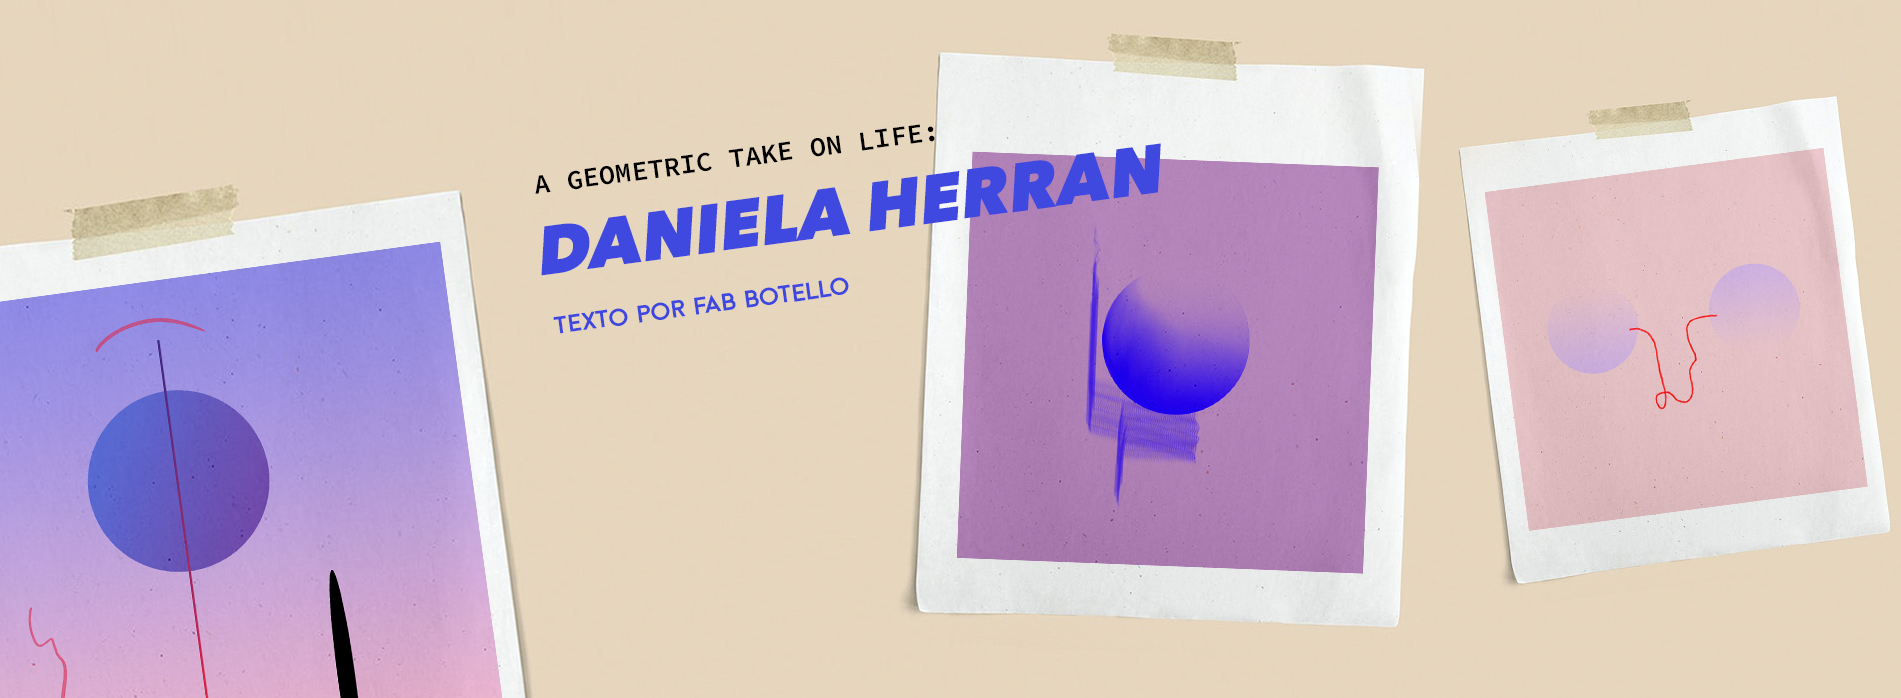 A geometric take on life: Platicamos con Daniela Herrán!